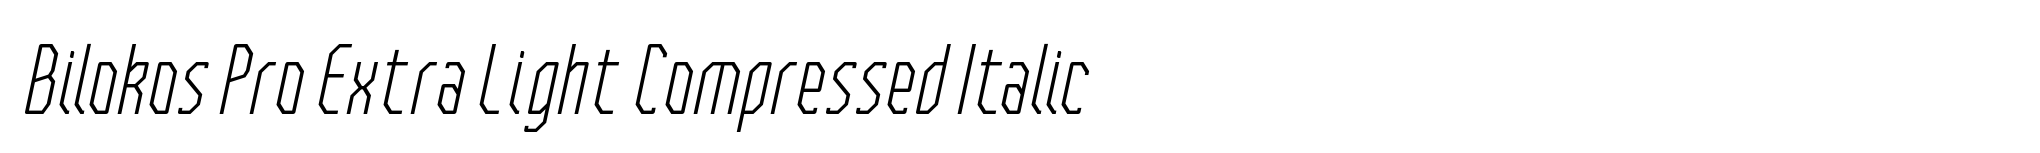 Bilokos Pro Extra Light Compressed Italic image